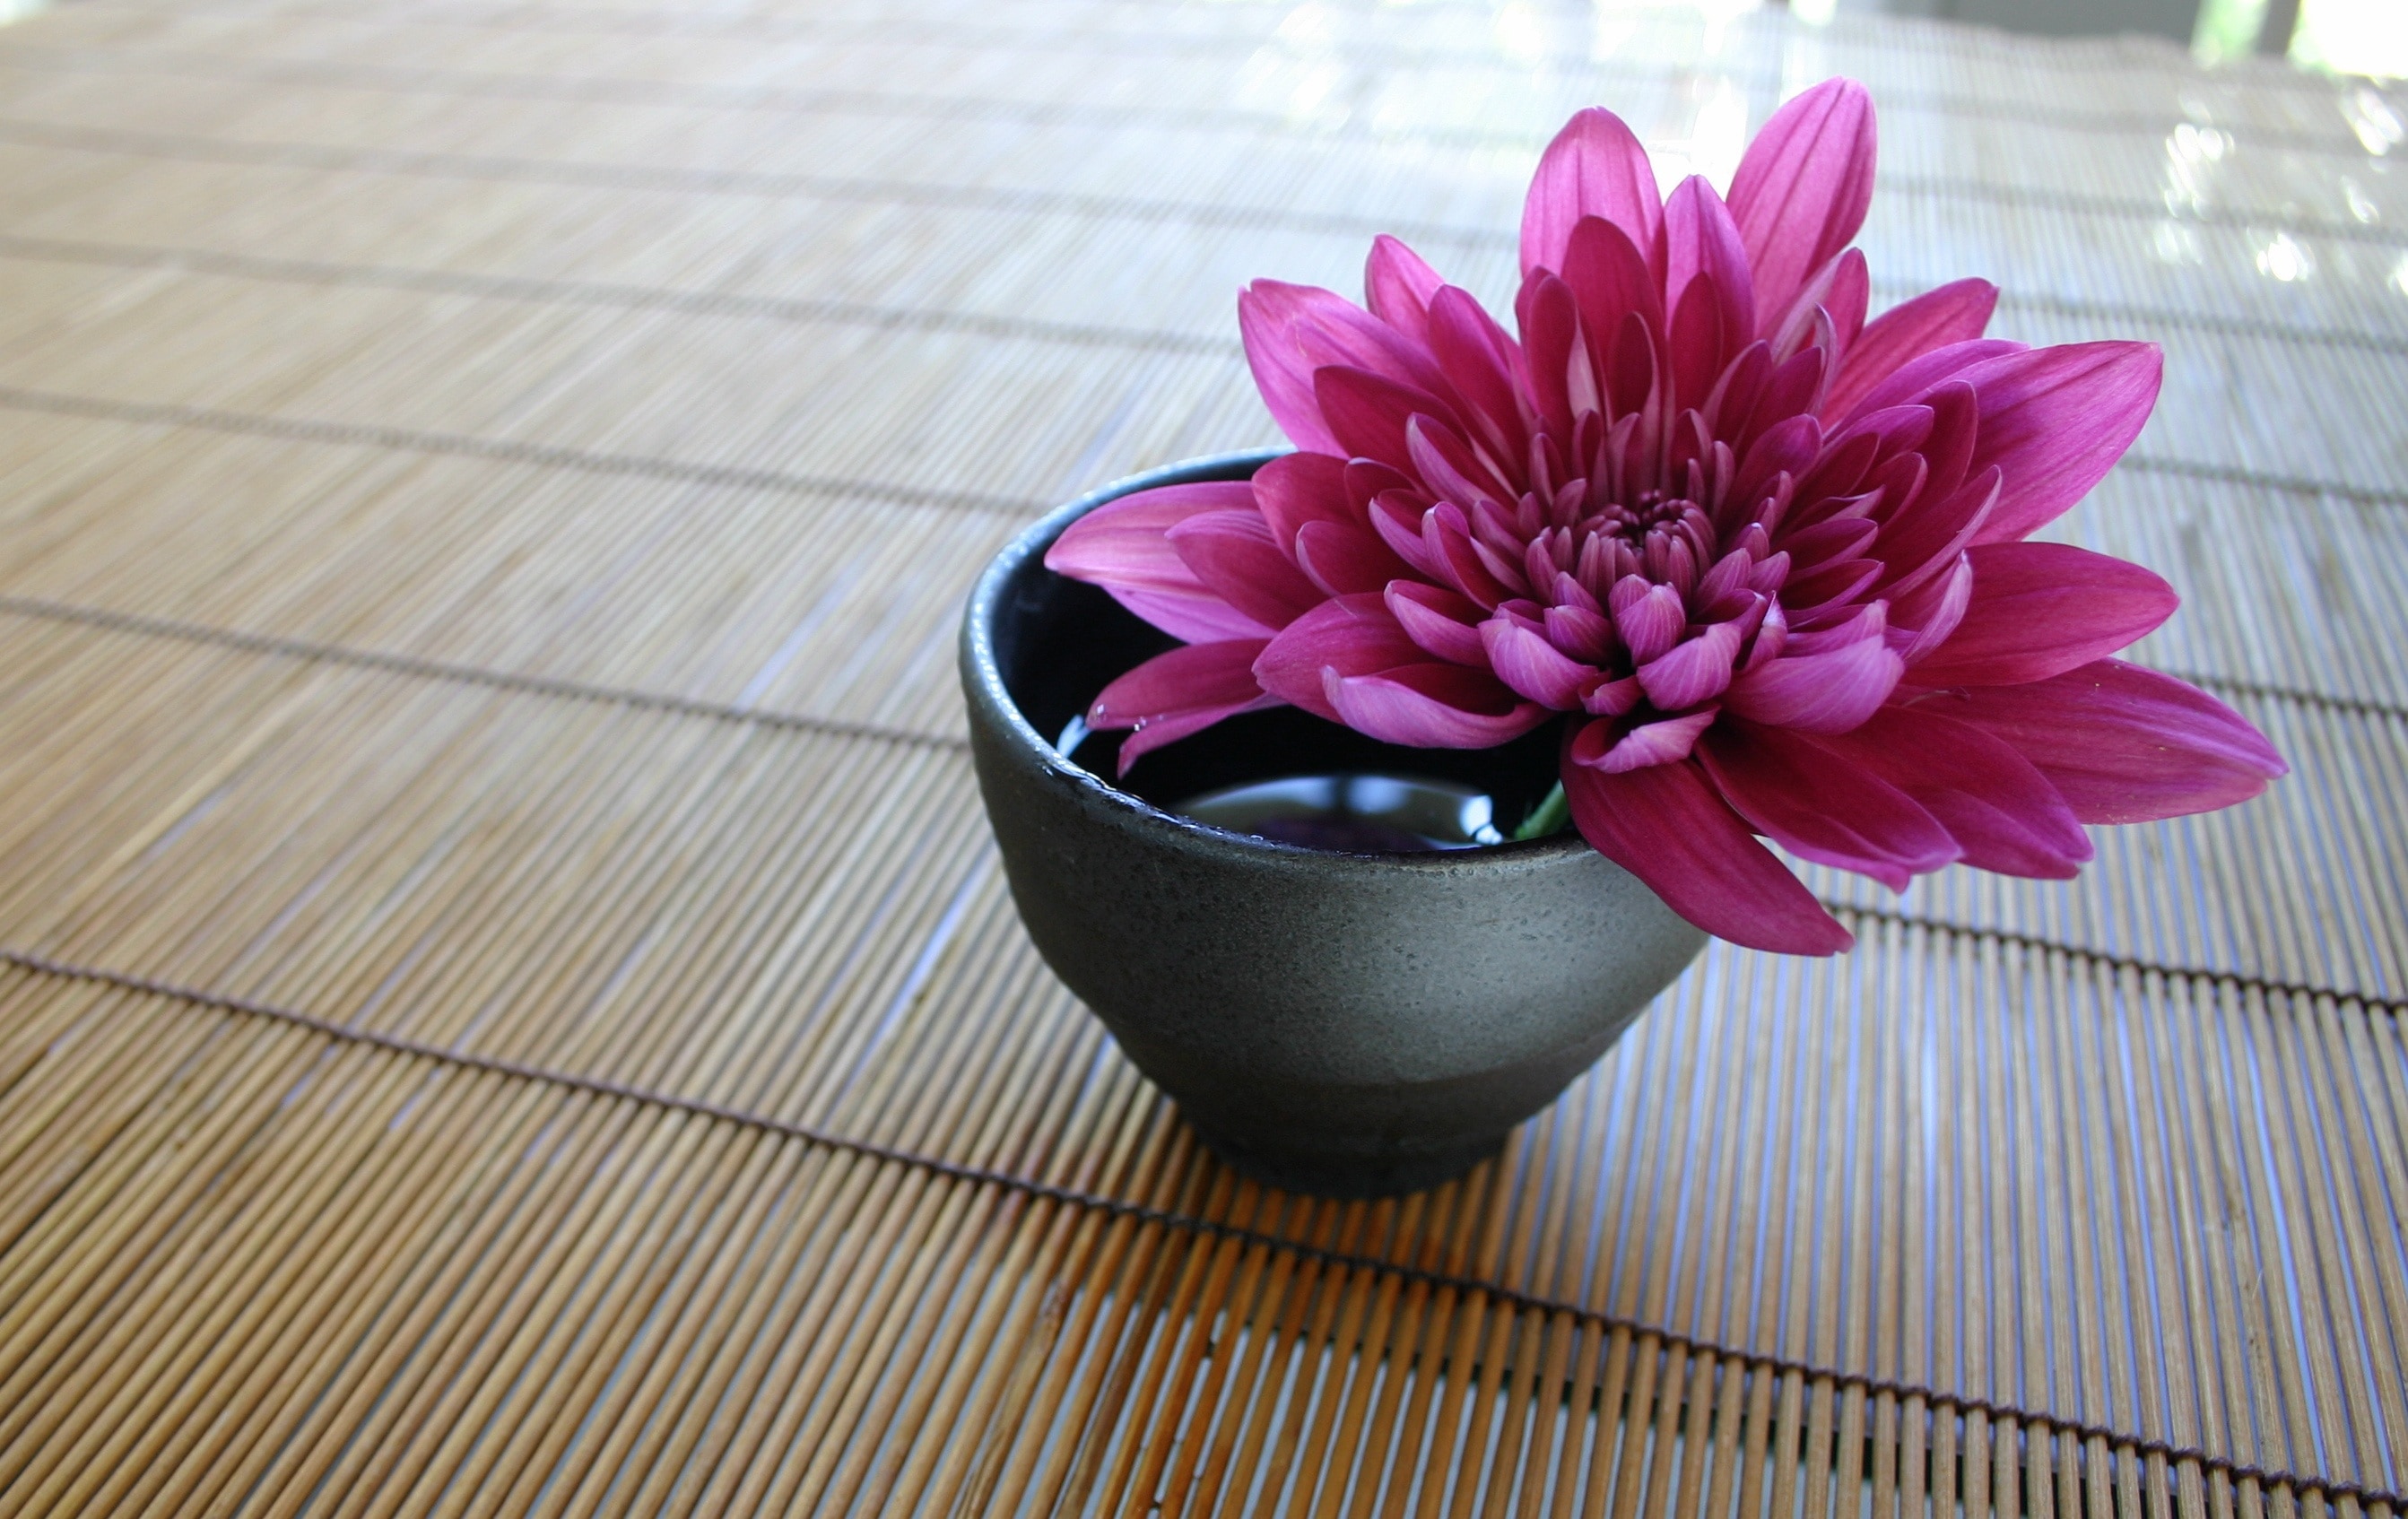 The Bamboo Curtain, Chrysanthemum, wood - material, purple